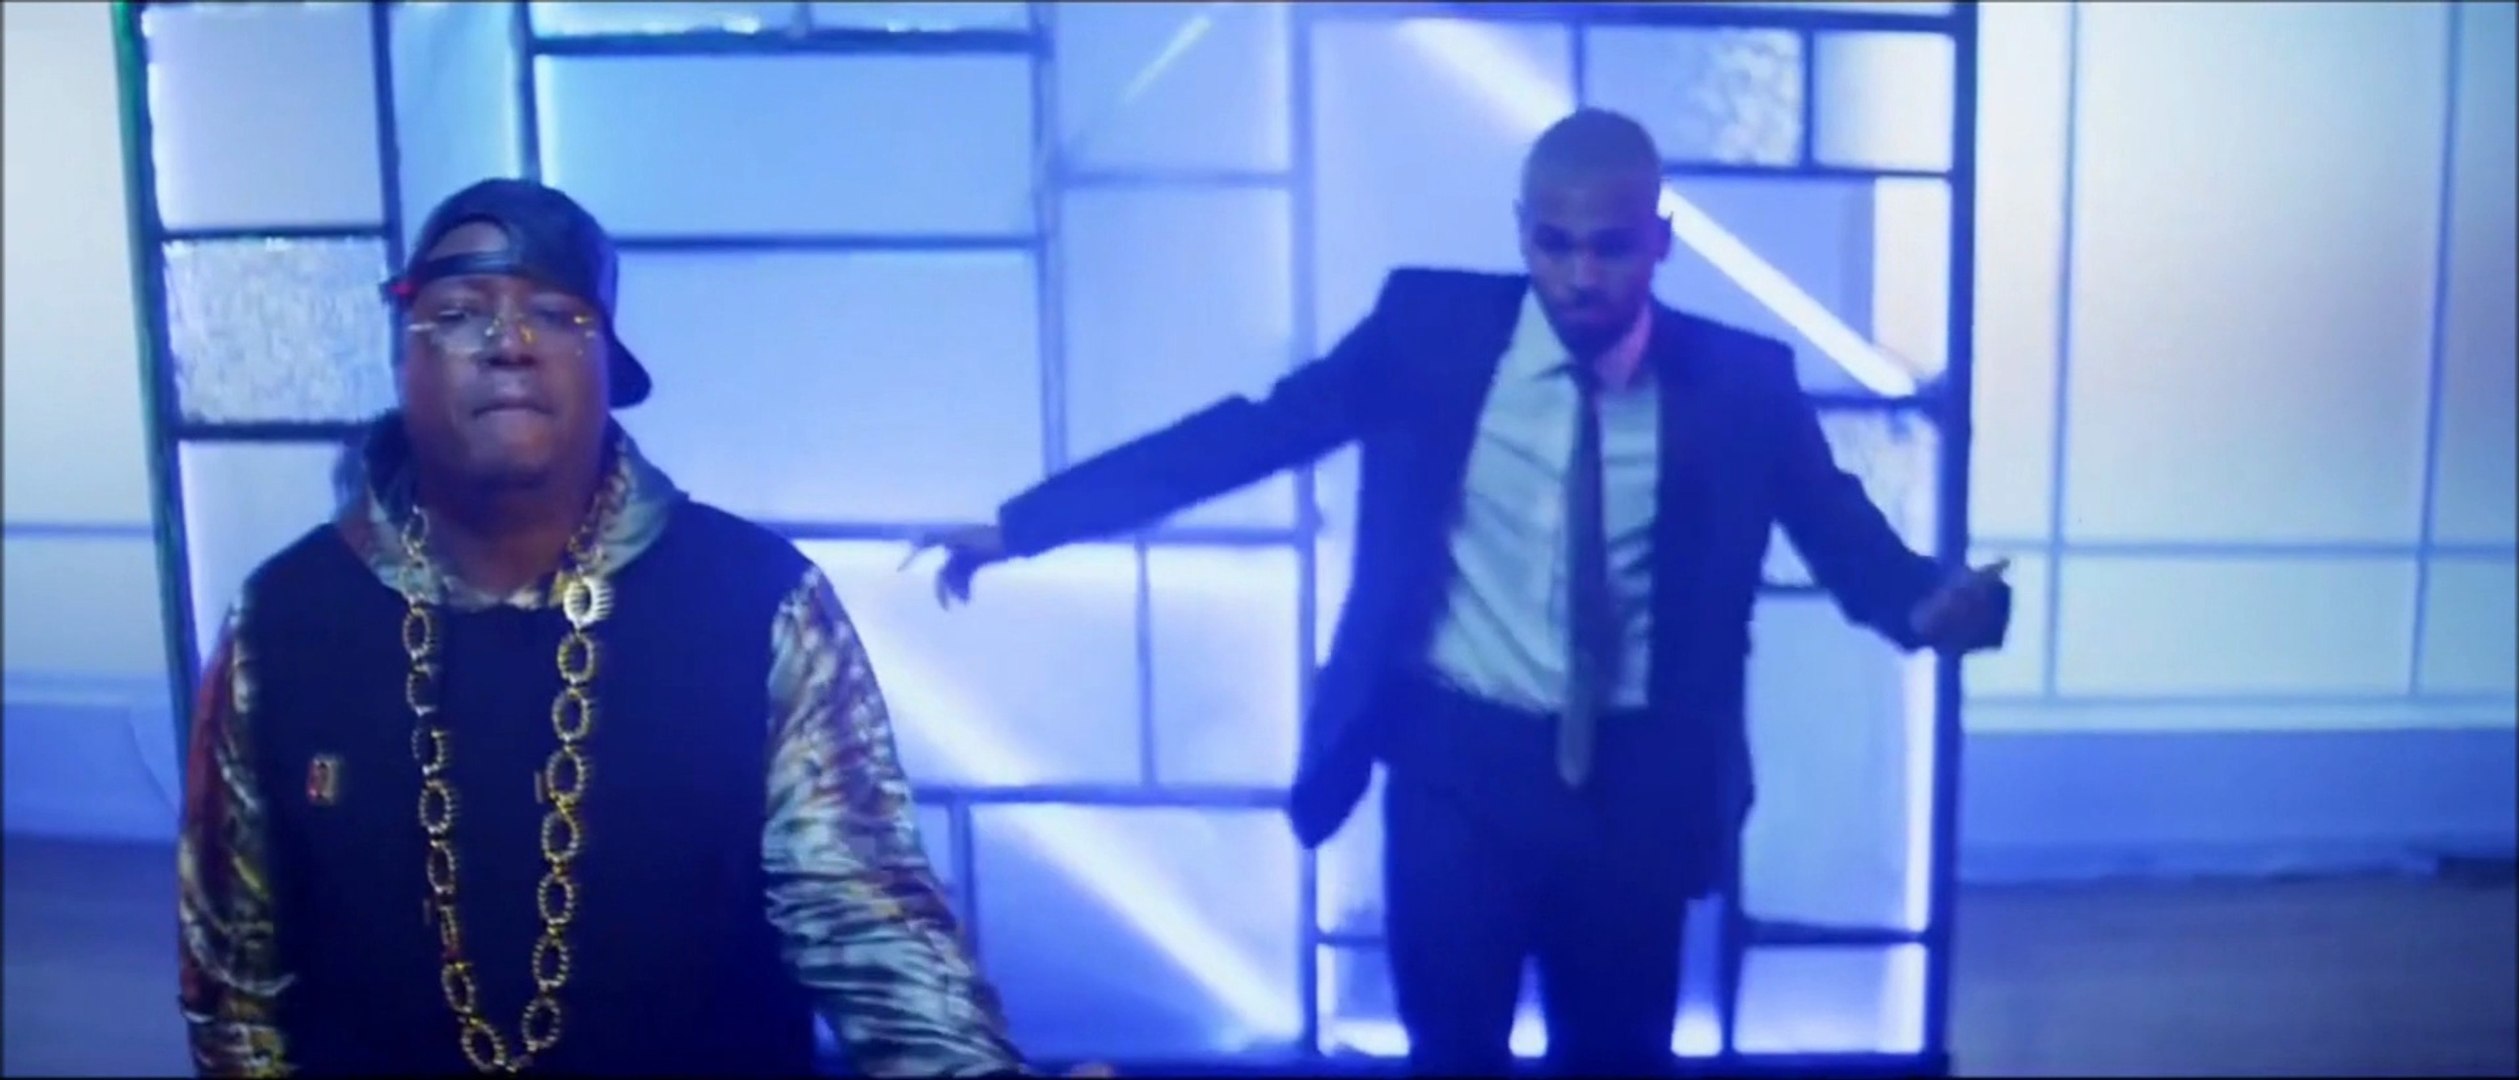 NEW MUSIC: E40 - Episode ft T.I. & Chris Brown 